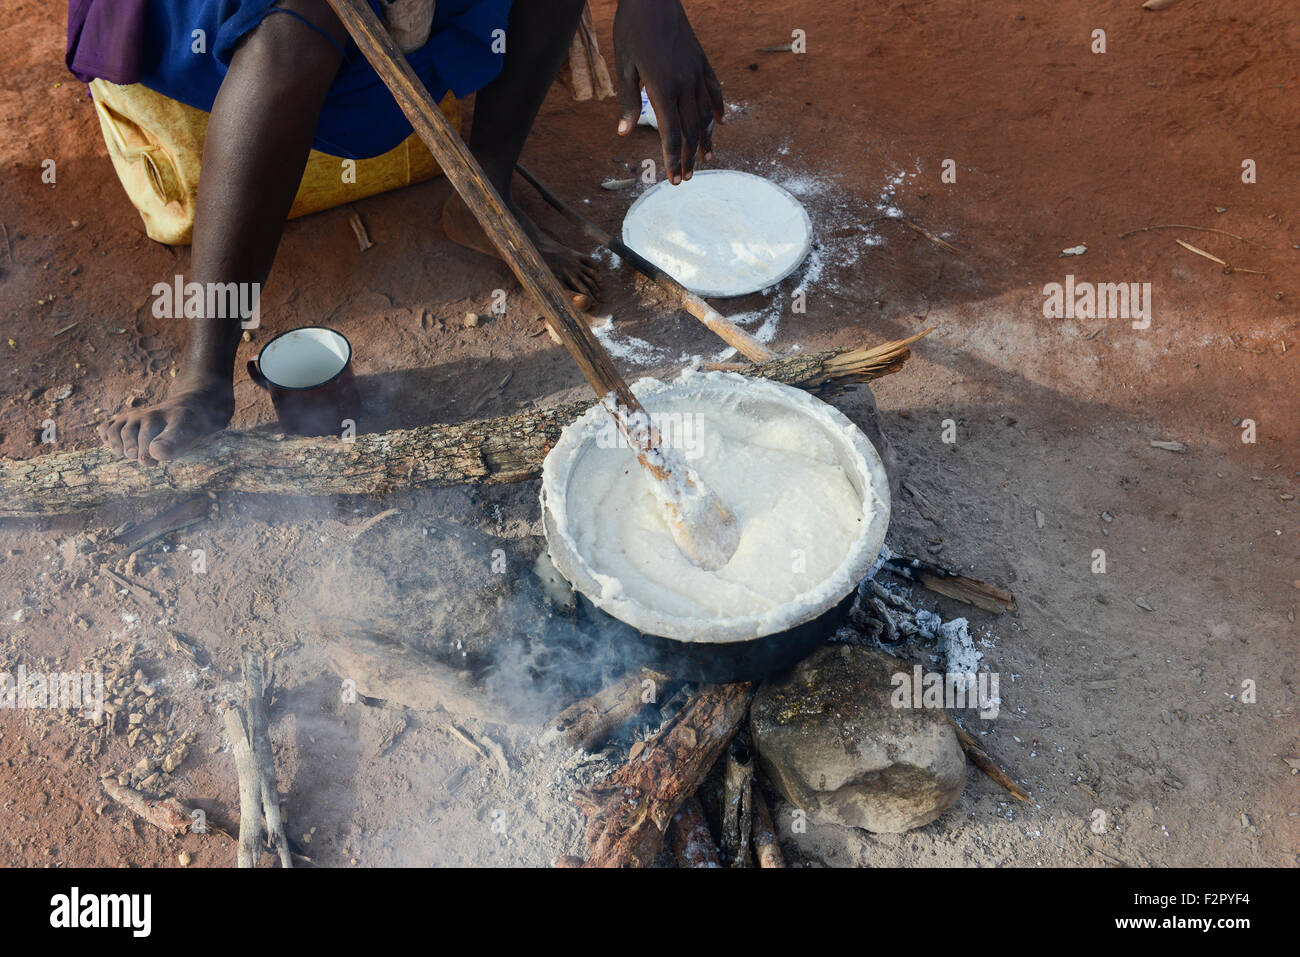 La TANZANIE, Korogwe, dans Kwalukonge, village Massai femme cuire le maïs mash / TANZANIE, Korogwe, Massai, Frau im Dorf Kwalukonge kocht, Maisbrei Essen Banque D'Images